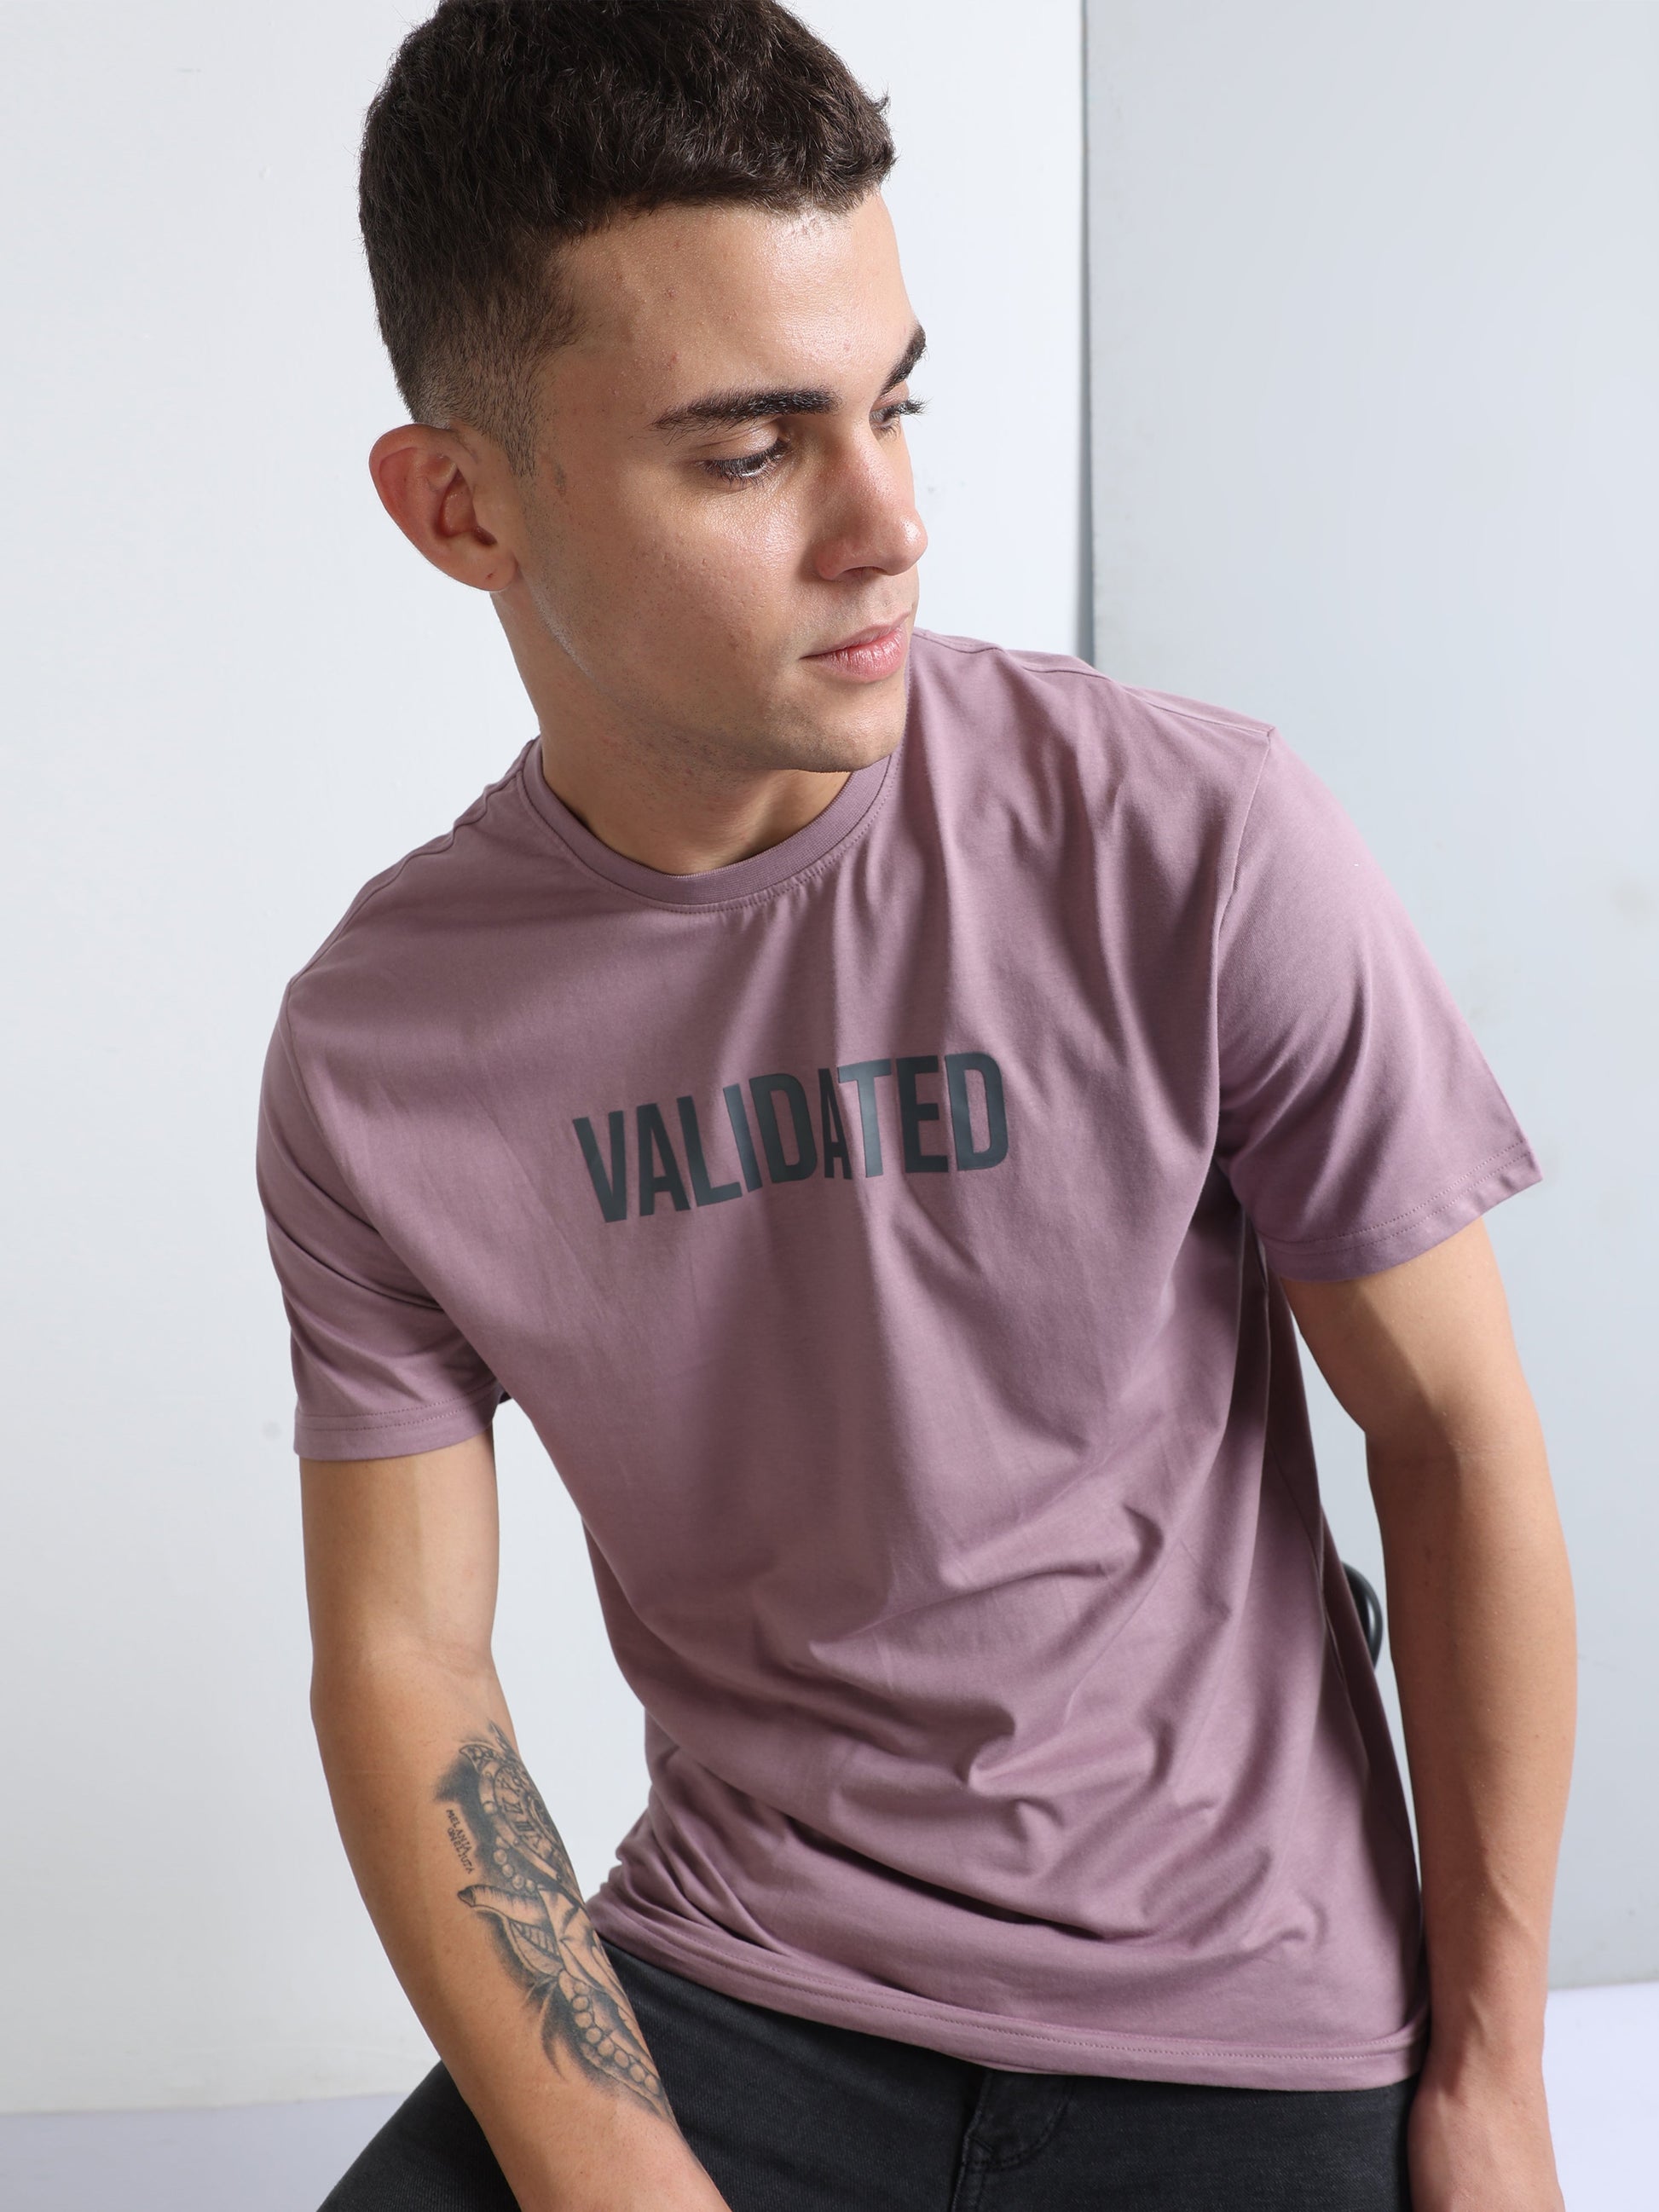 Buy Validated Hd Print Fashion T-Shirt Online.